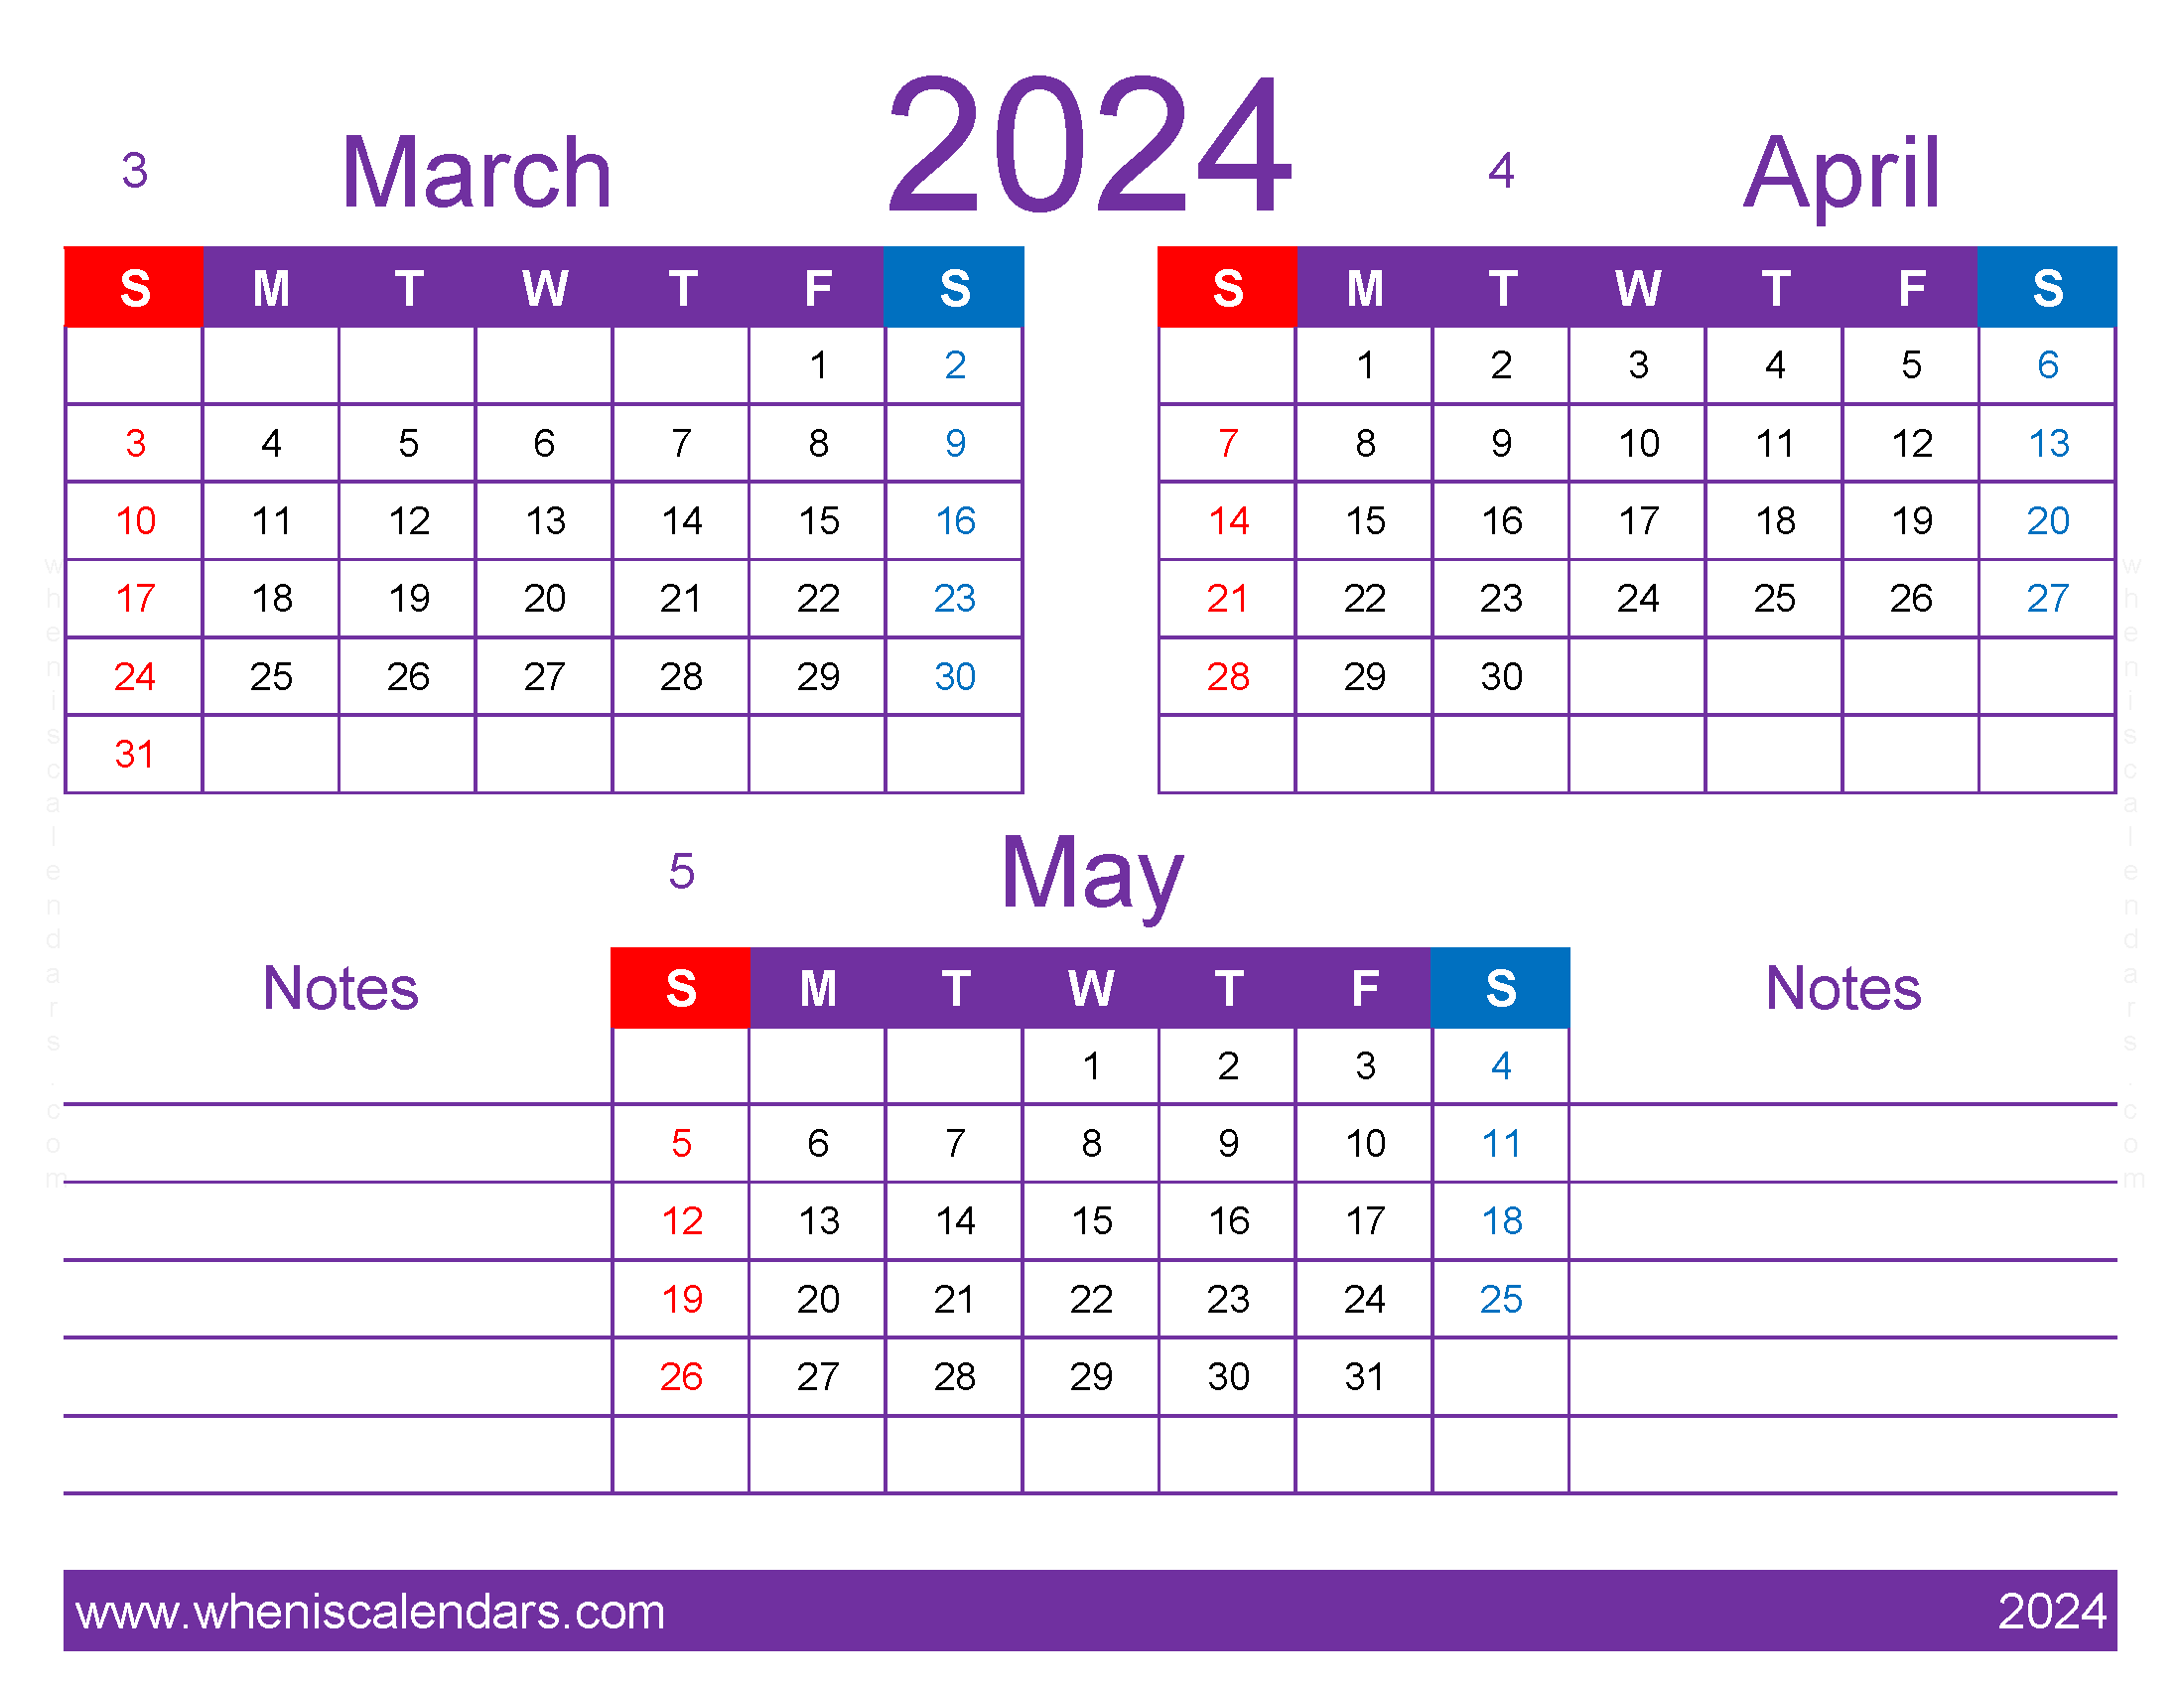 Download 2024 Mar Apr May calendar MAM433